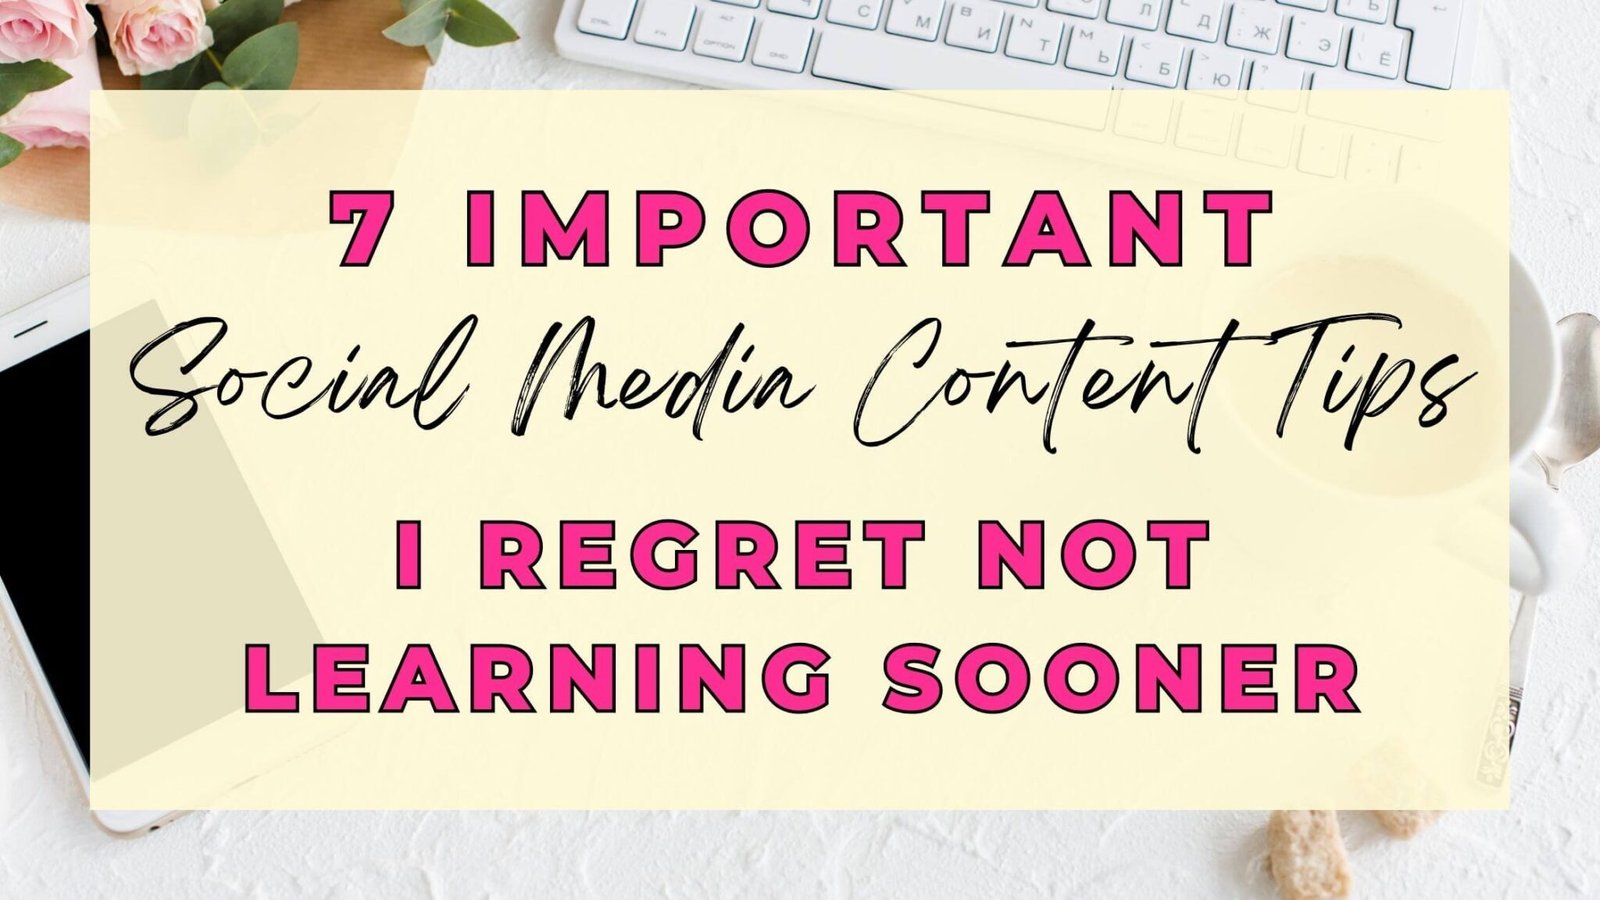 7 Important Social Media Content Tips I Regret Not Learning Sooner